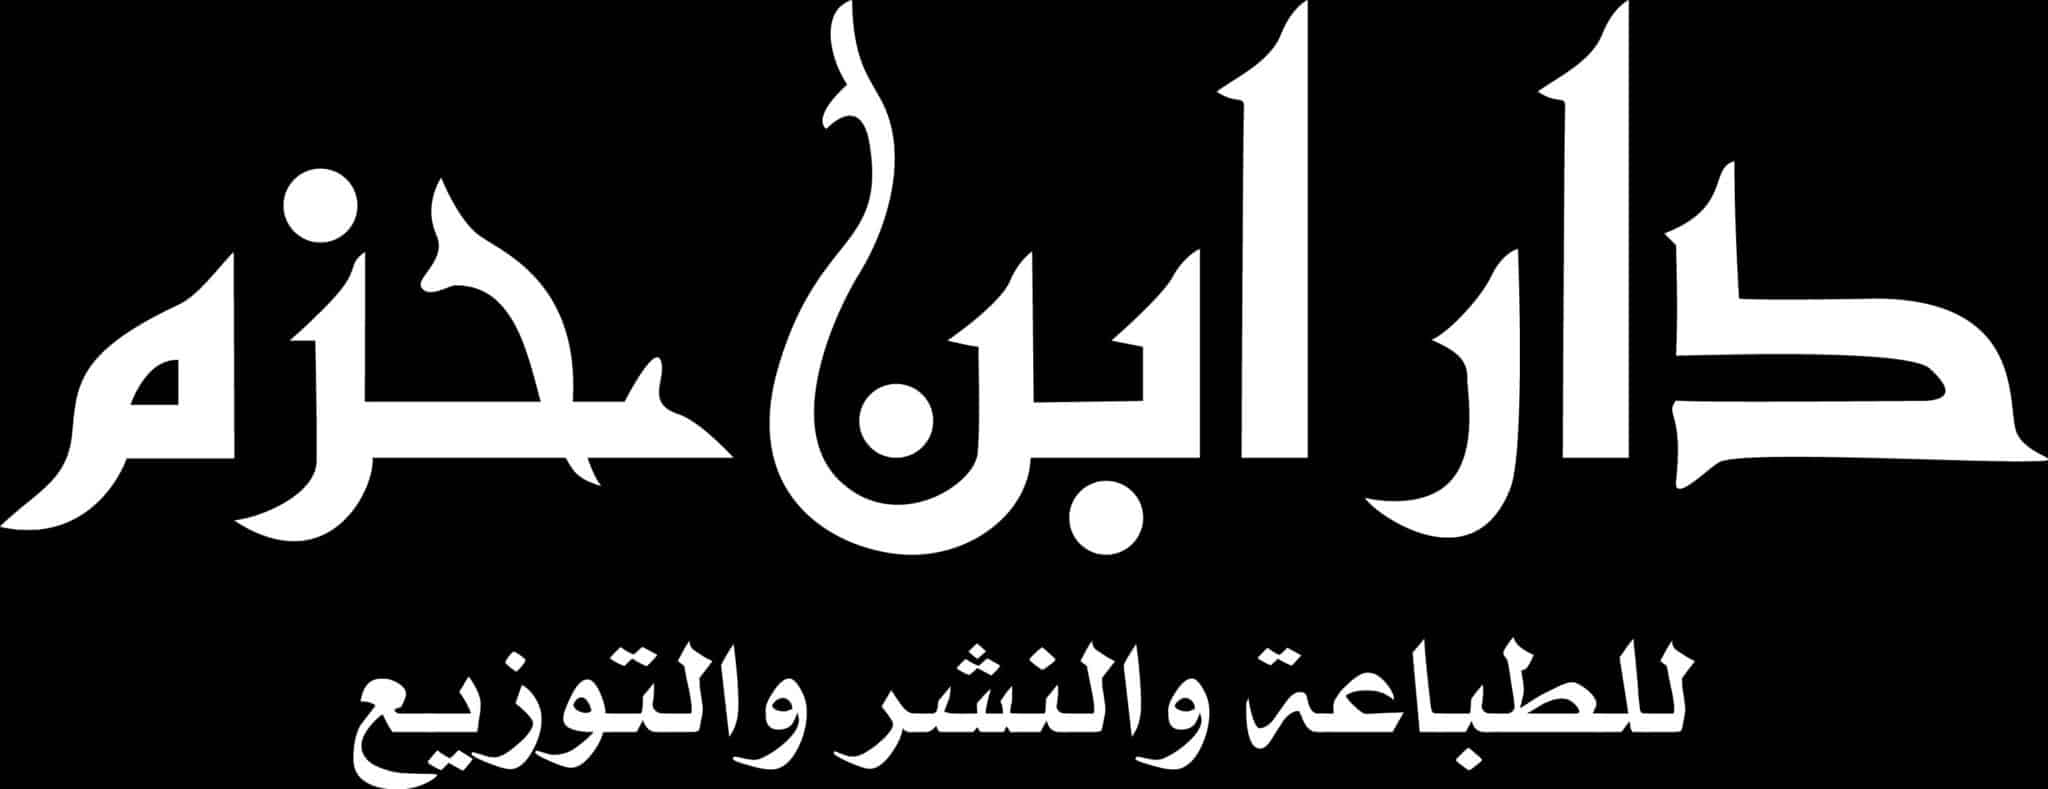 logo ibnhazm scaled